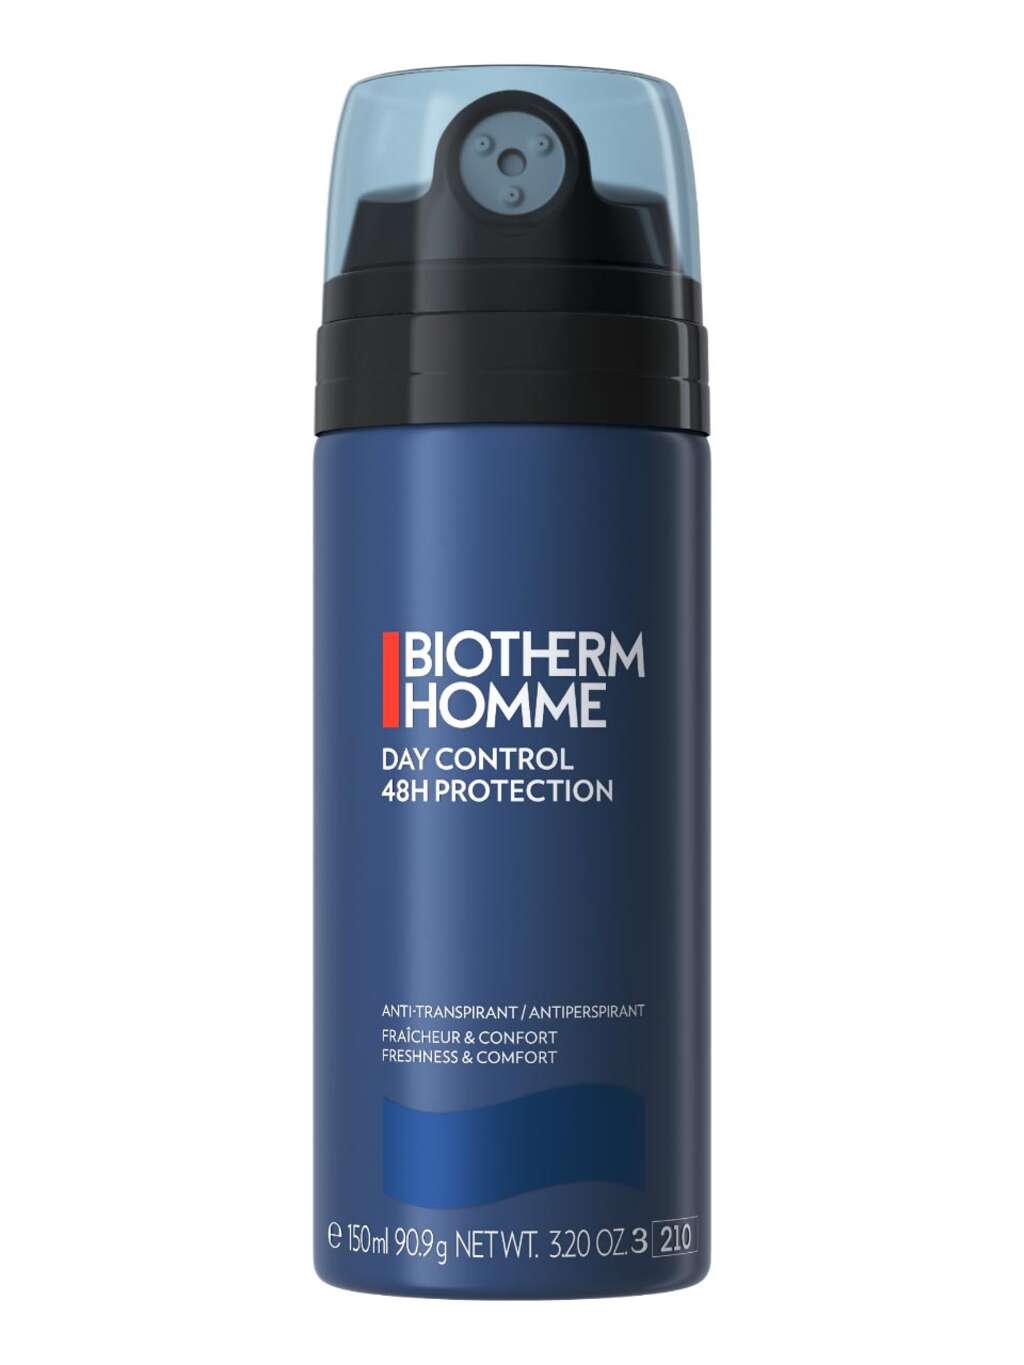 Biotherm Homme Day Control déodorant spray